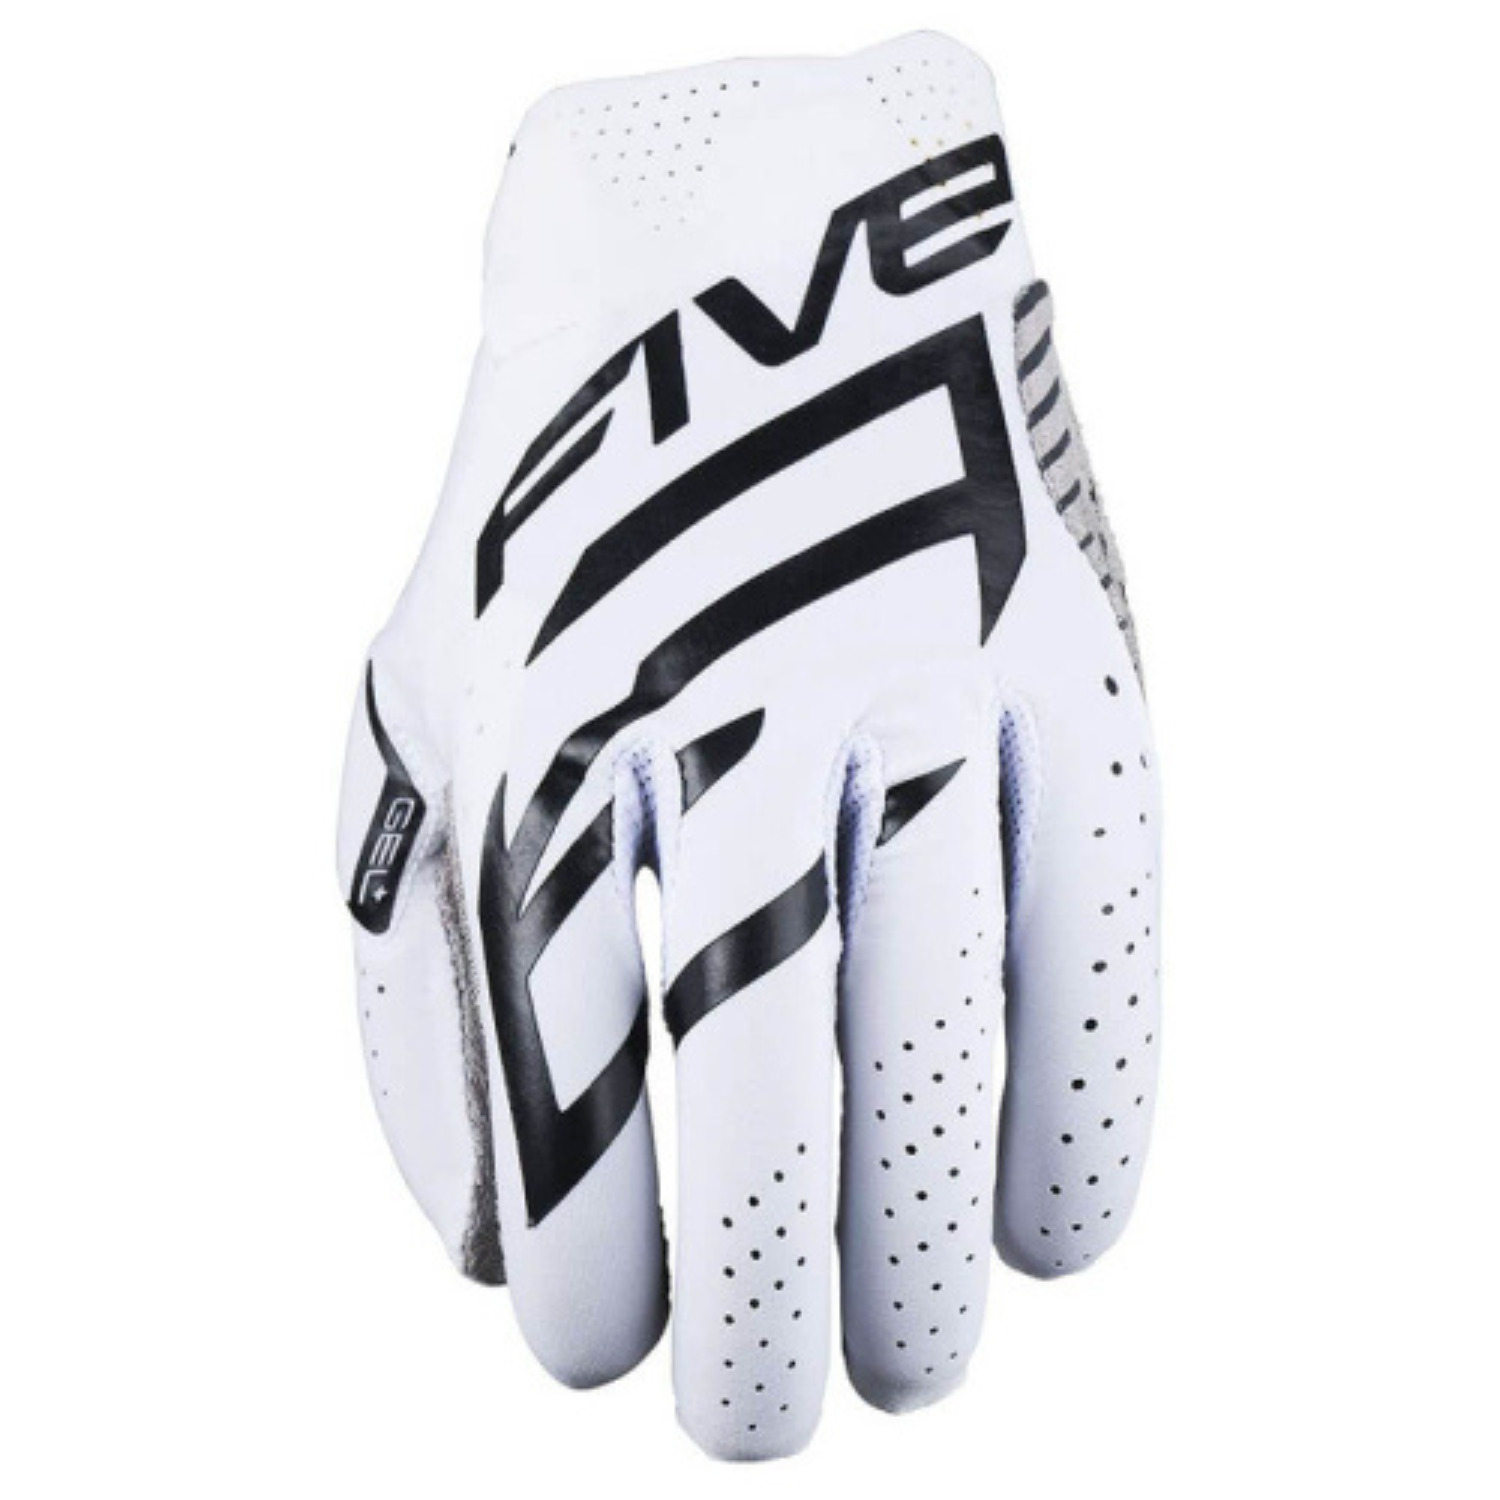 Image of Five MXF Race Gloves White Black Größe 2XL